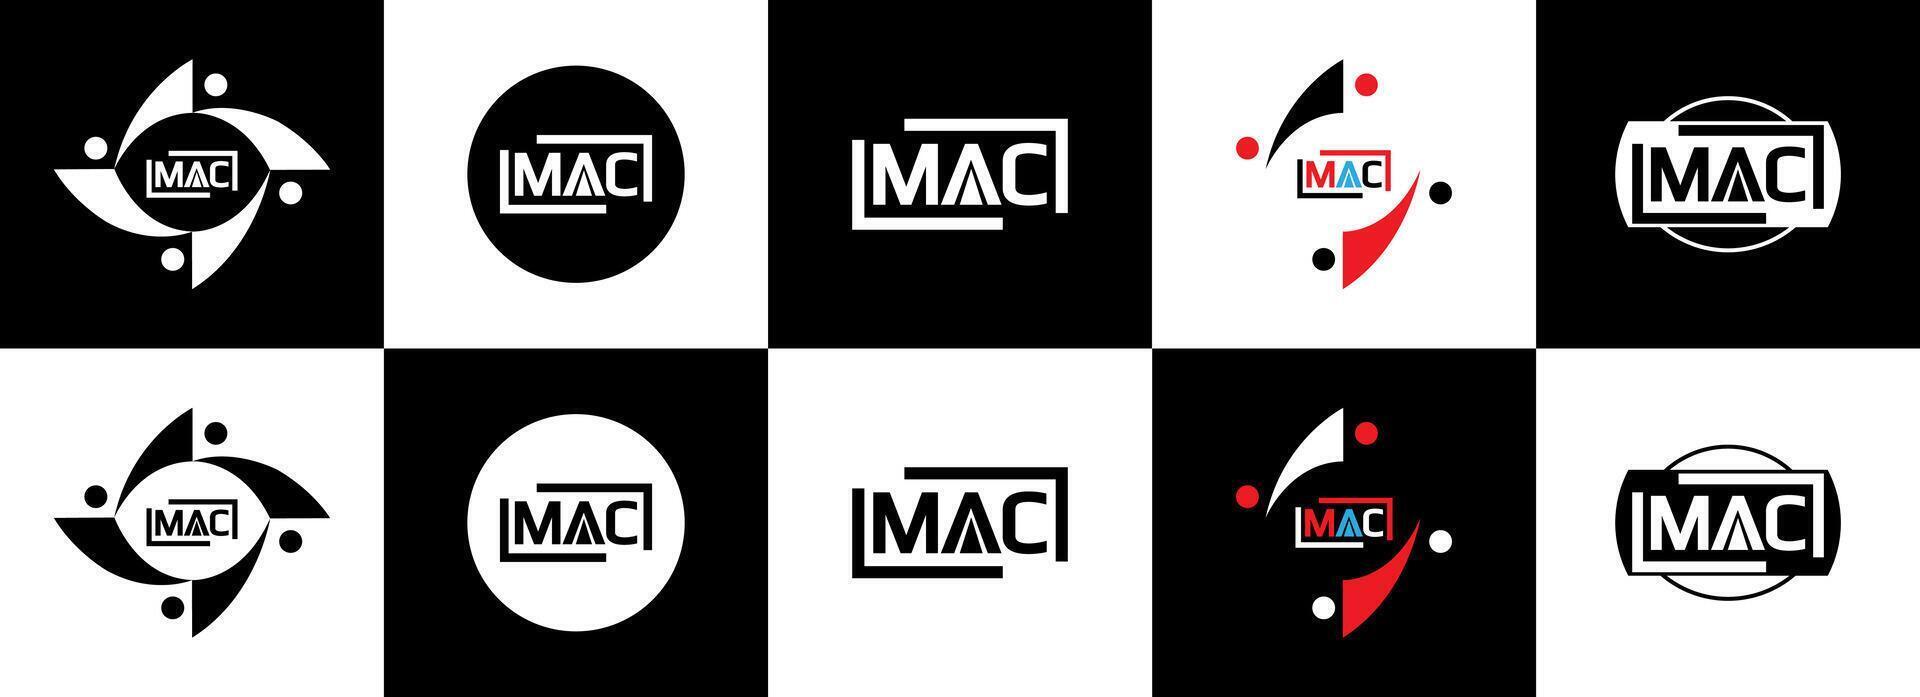 Mac logo. m un' c design. bianca Mac lettera. Mac, m un' c lettera logo design. iniziale lettera Mac connesso cerchio maiuscolo monogramma logo. m un' c lettera logo vettore design. professionista vettore